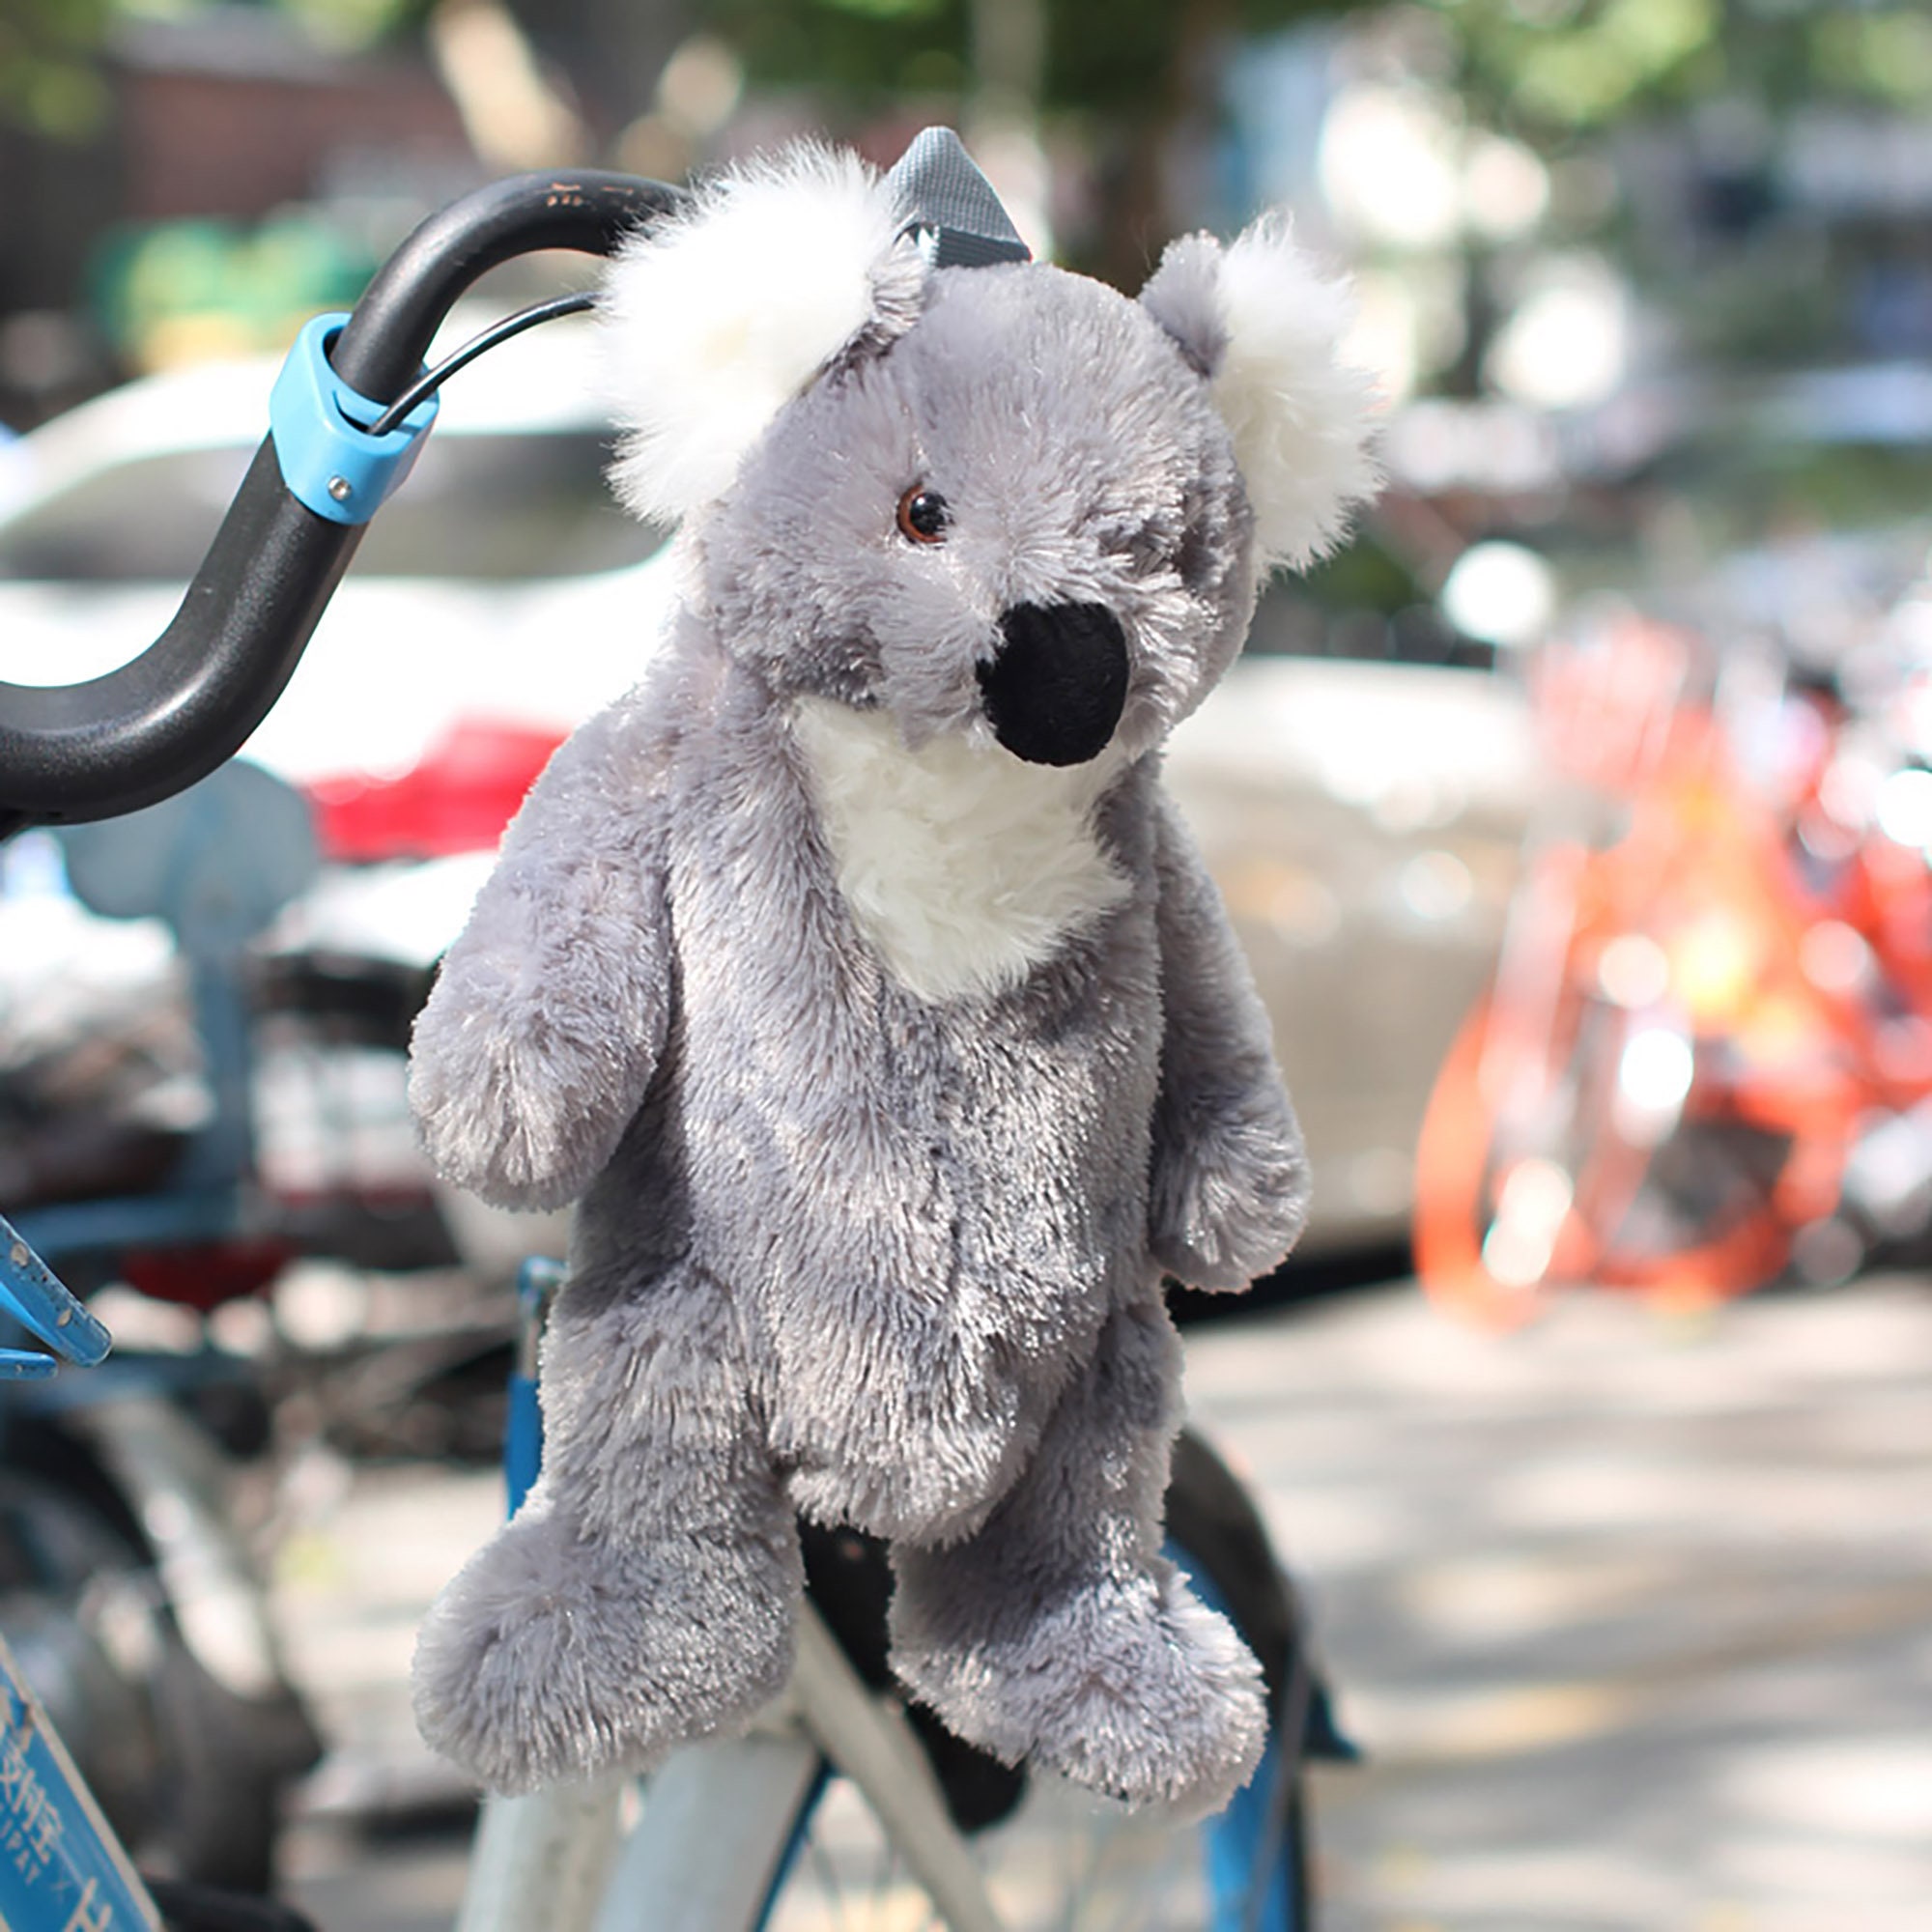 Plush Koala Keychain Backpack, Fluffy Koala Stuffed Animal